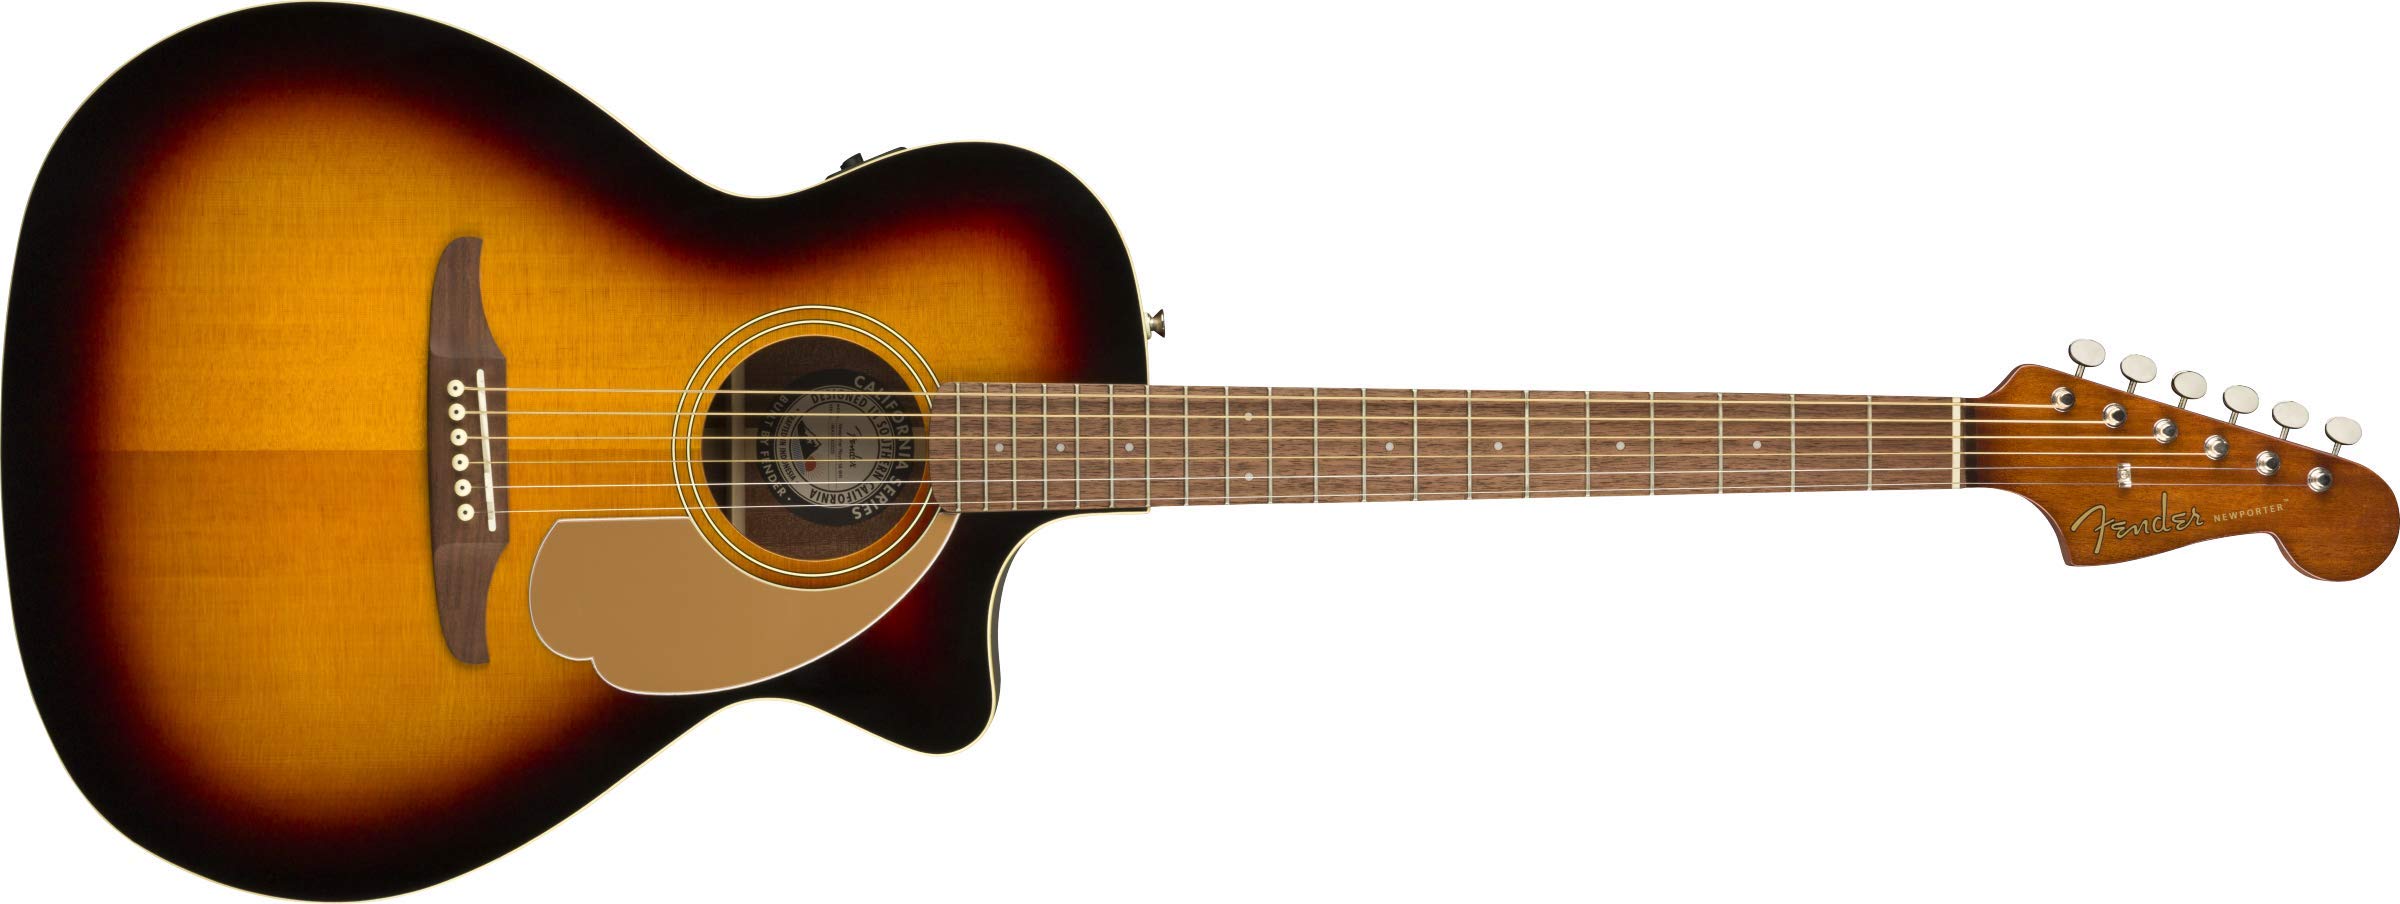 Fender न्यूपोर्टर प्लेयर ध्वनिक गिटार - सनबर्स्ट